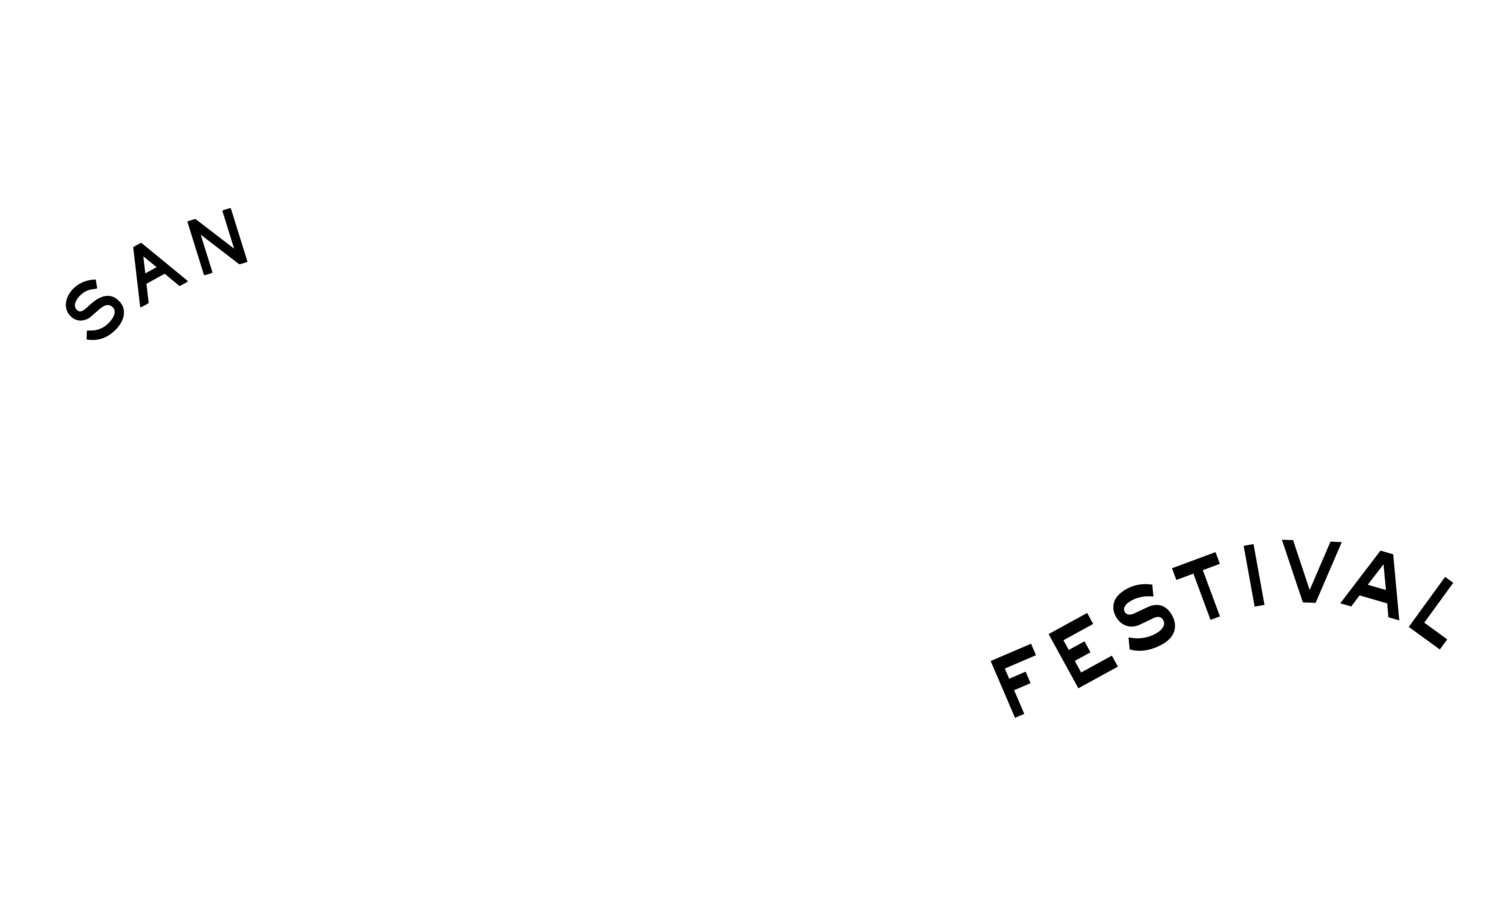 San Francisco Coffee Festival